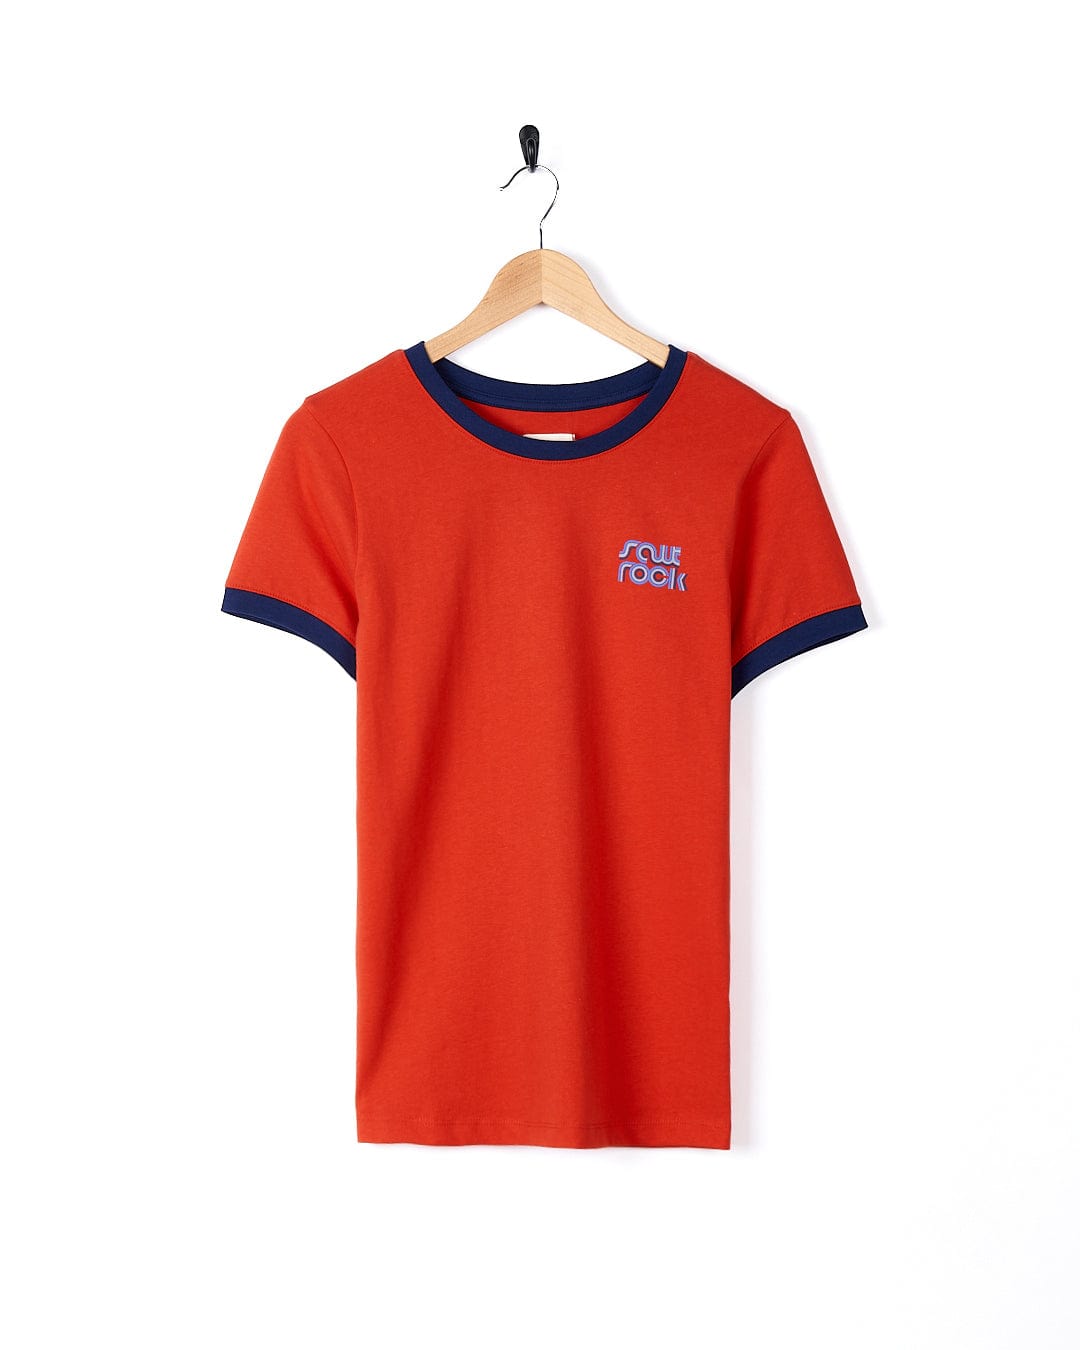 A Retro Wave Mini - Womens Short Sleeve T-Shirt - Red featuring blue trim and Saltrock branding.